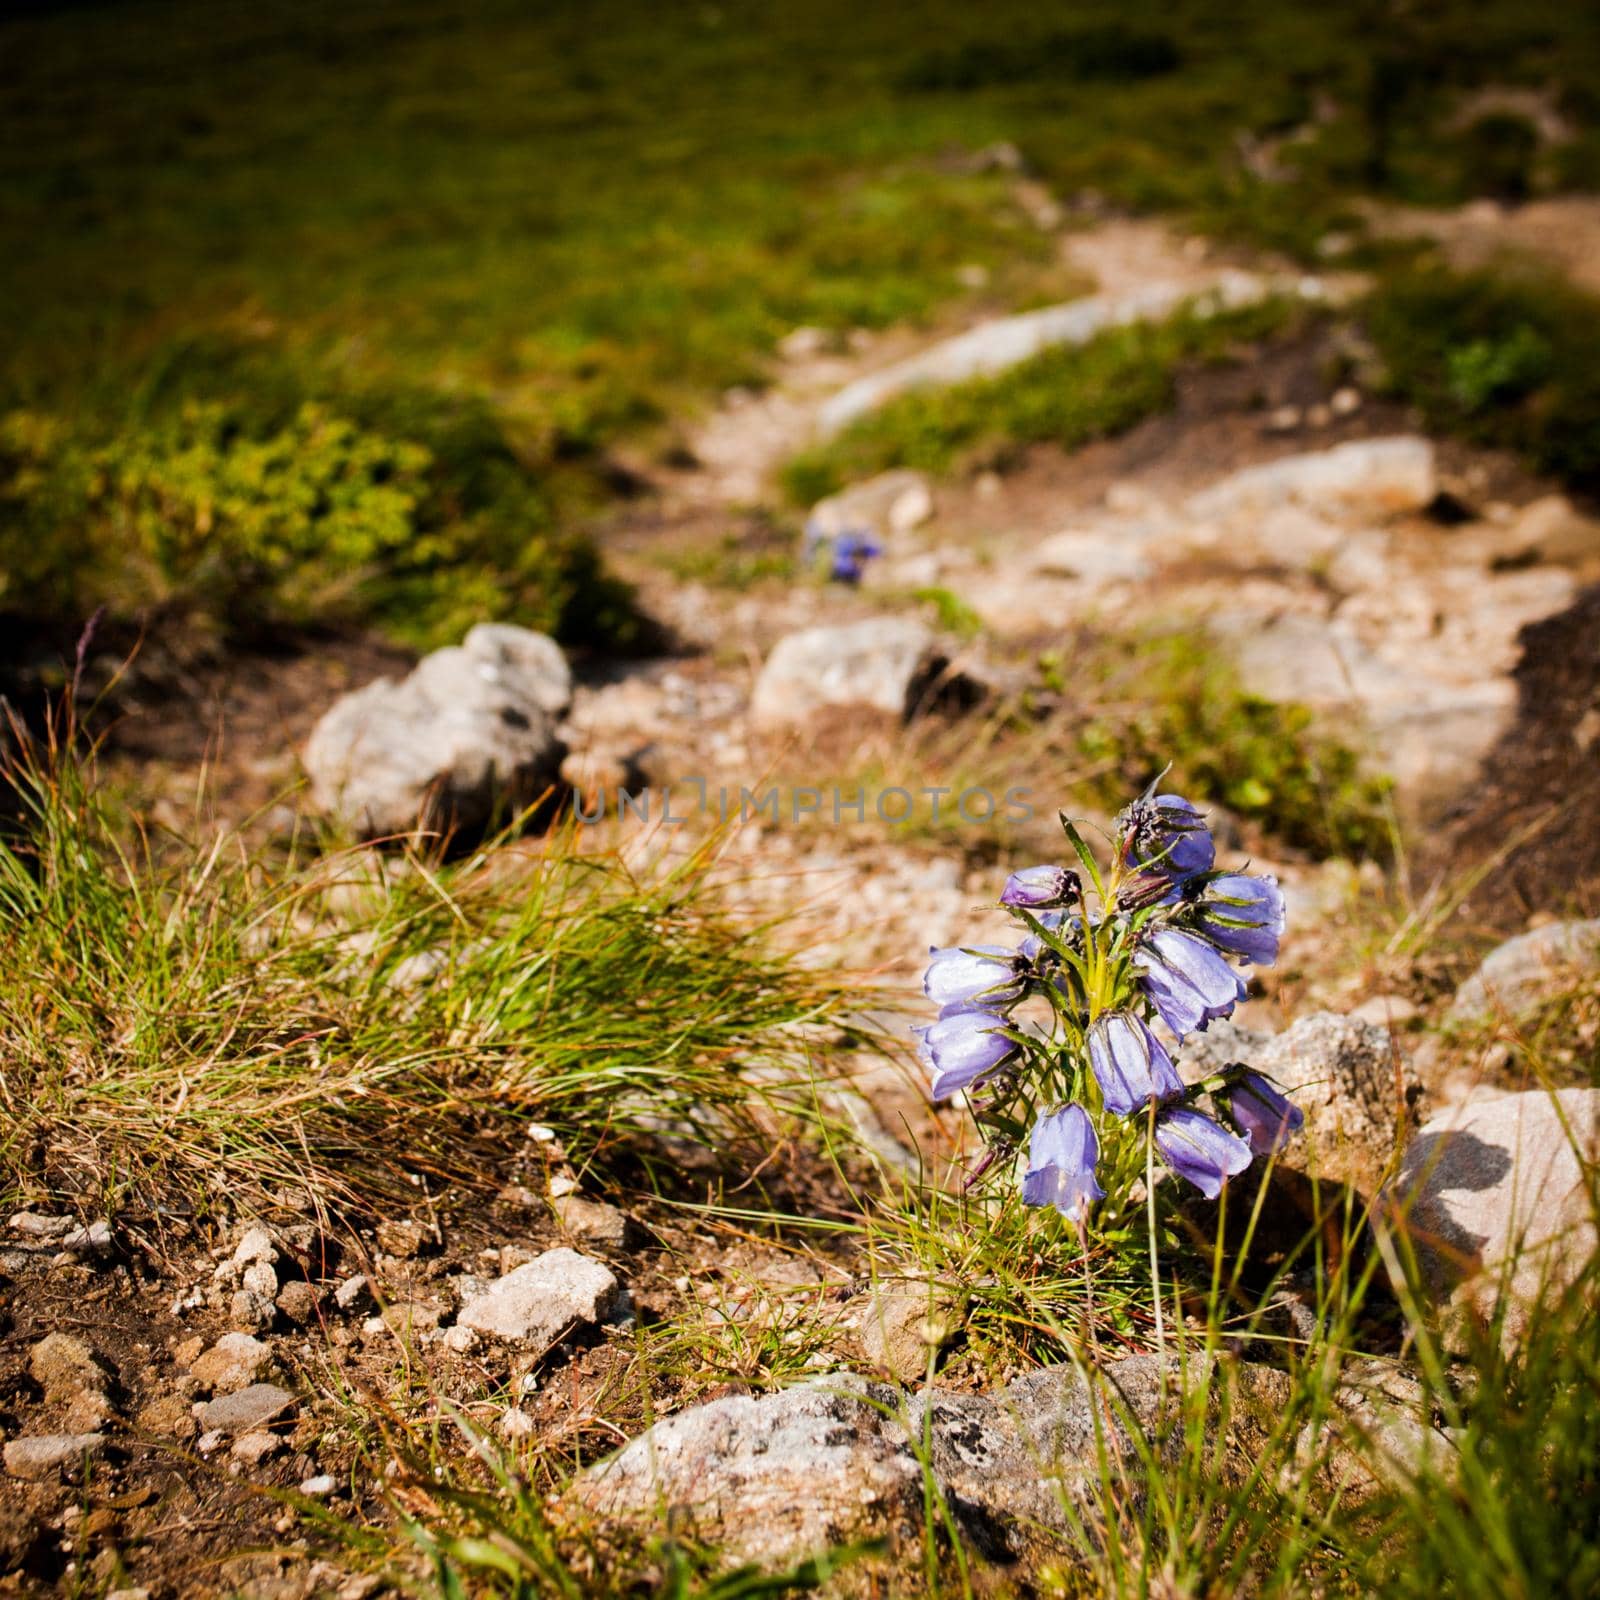 Lilac bells - lat. Campanula alpina - wildfllowers of Carpathian mountains